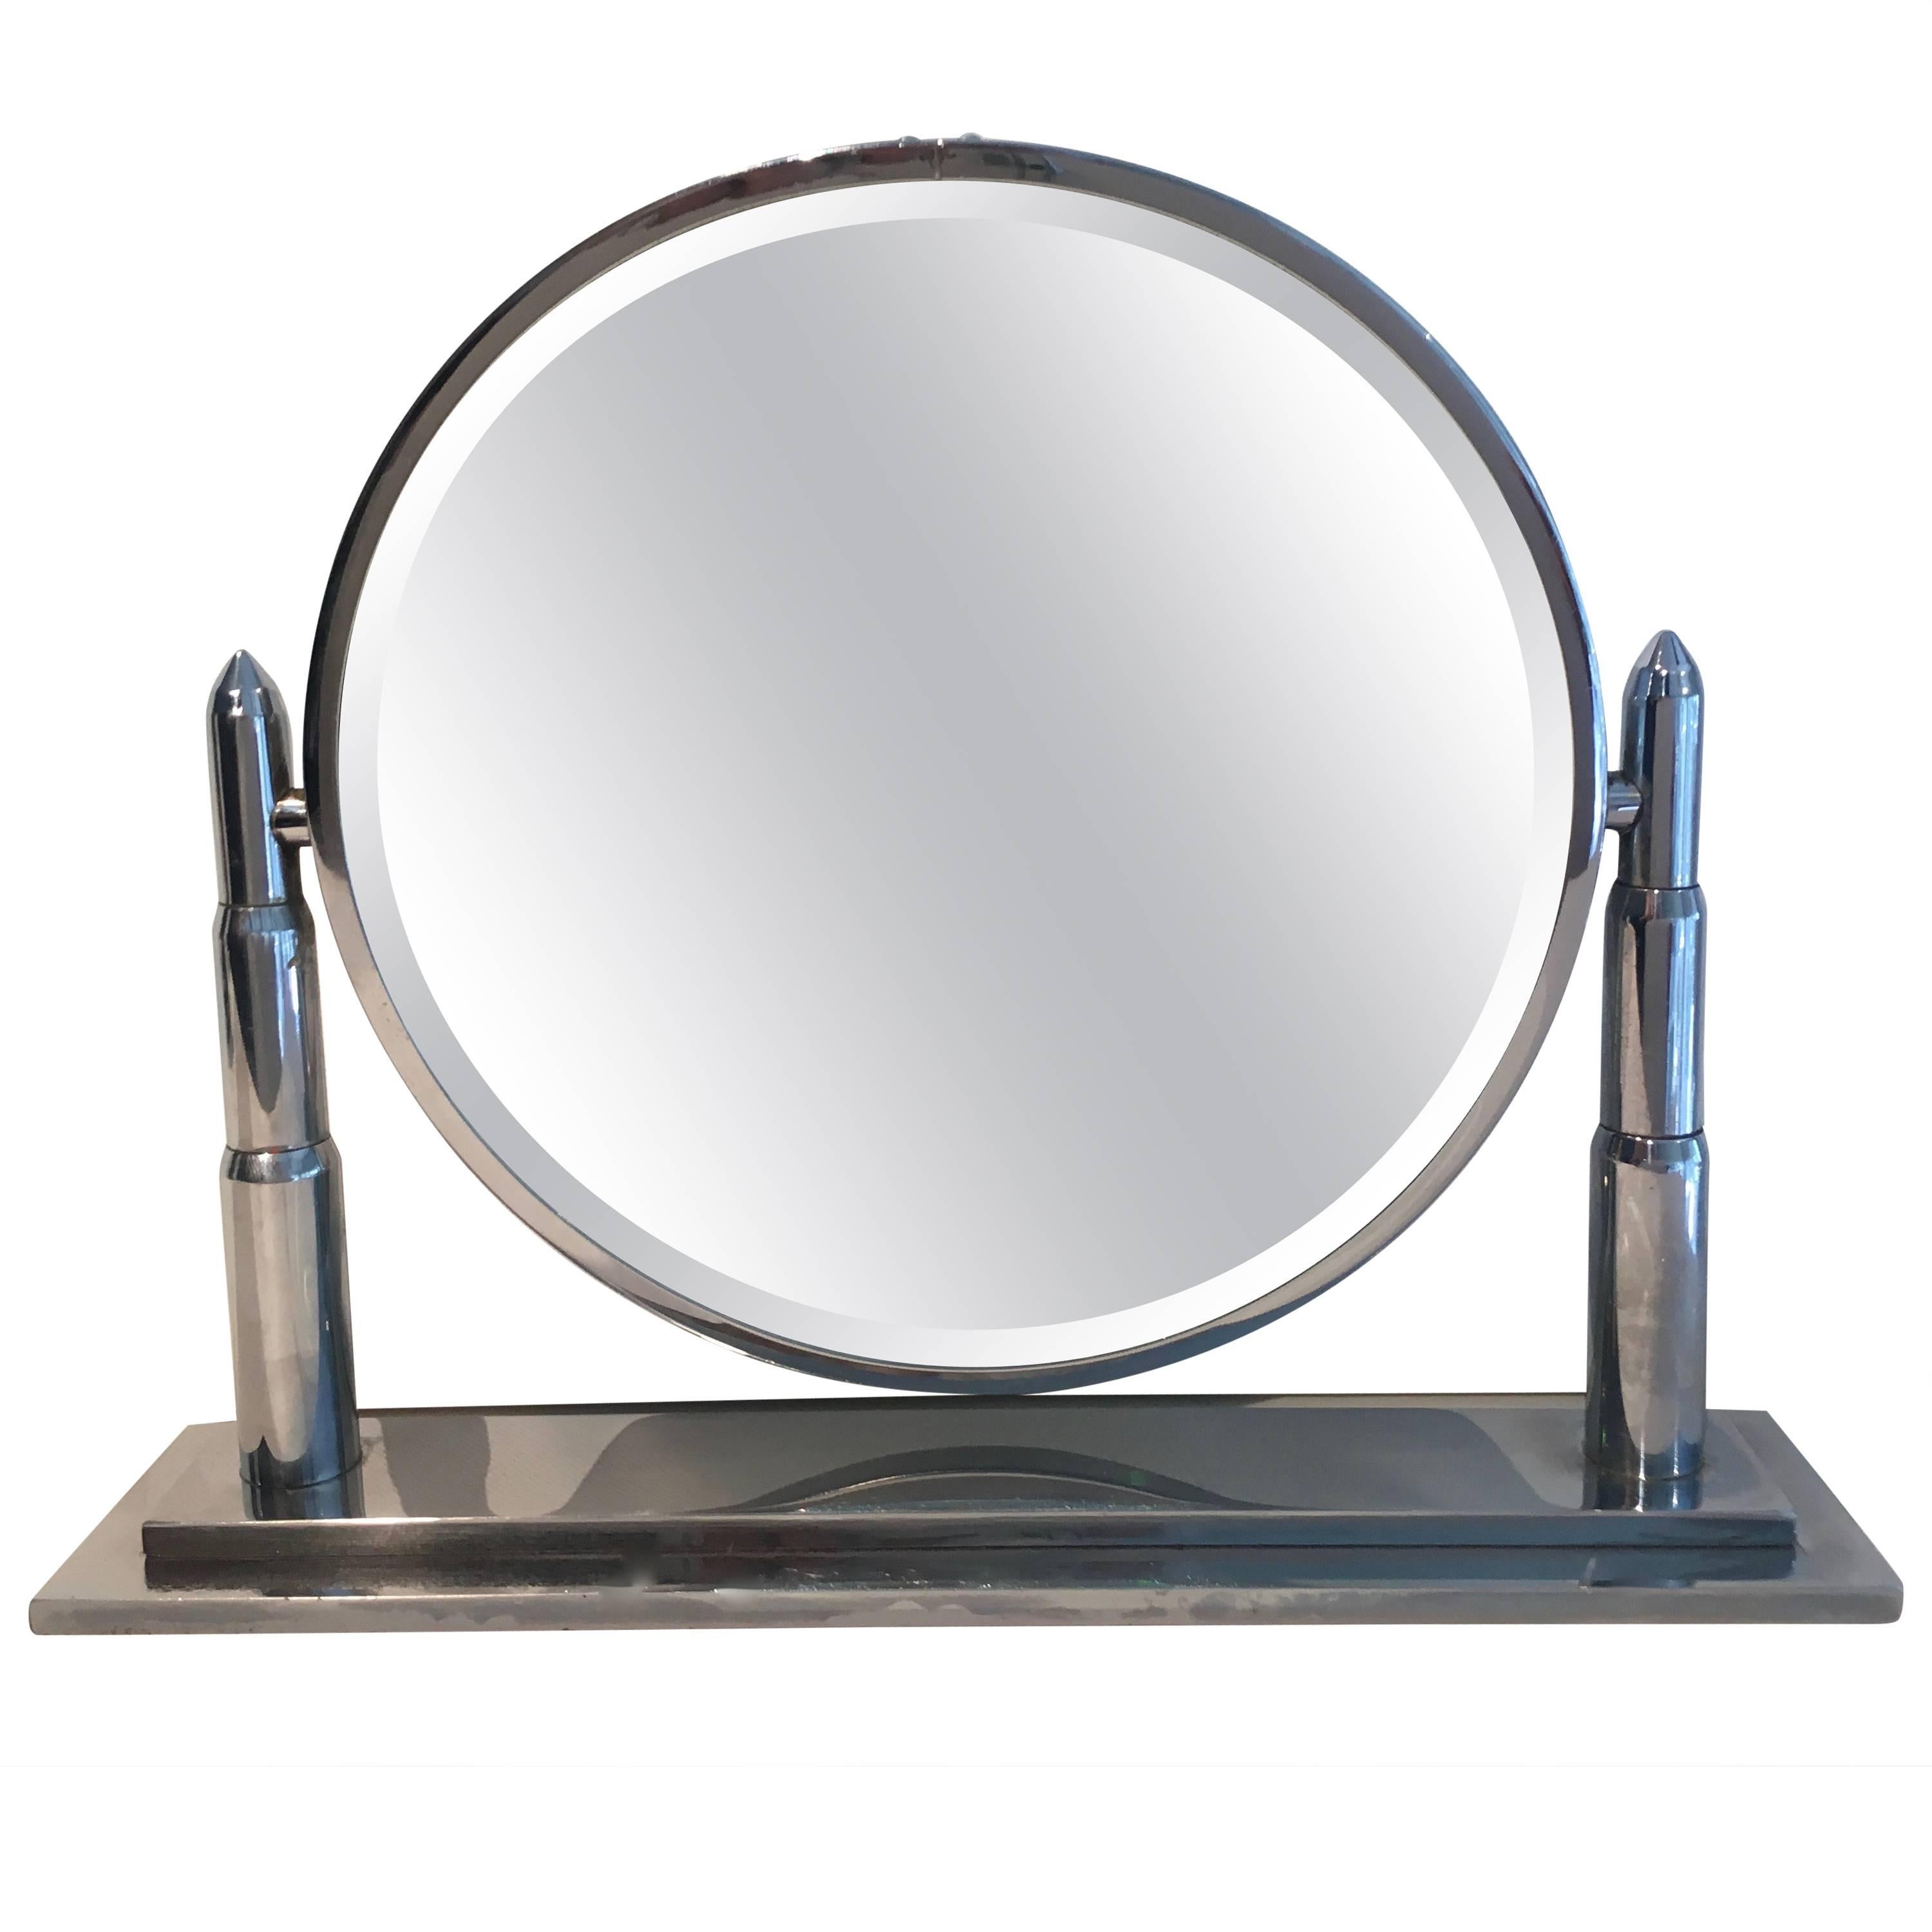 Stunning Art Deco Vanity Mirror after Donald Deskey